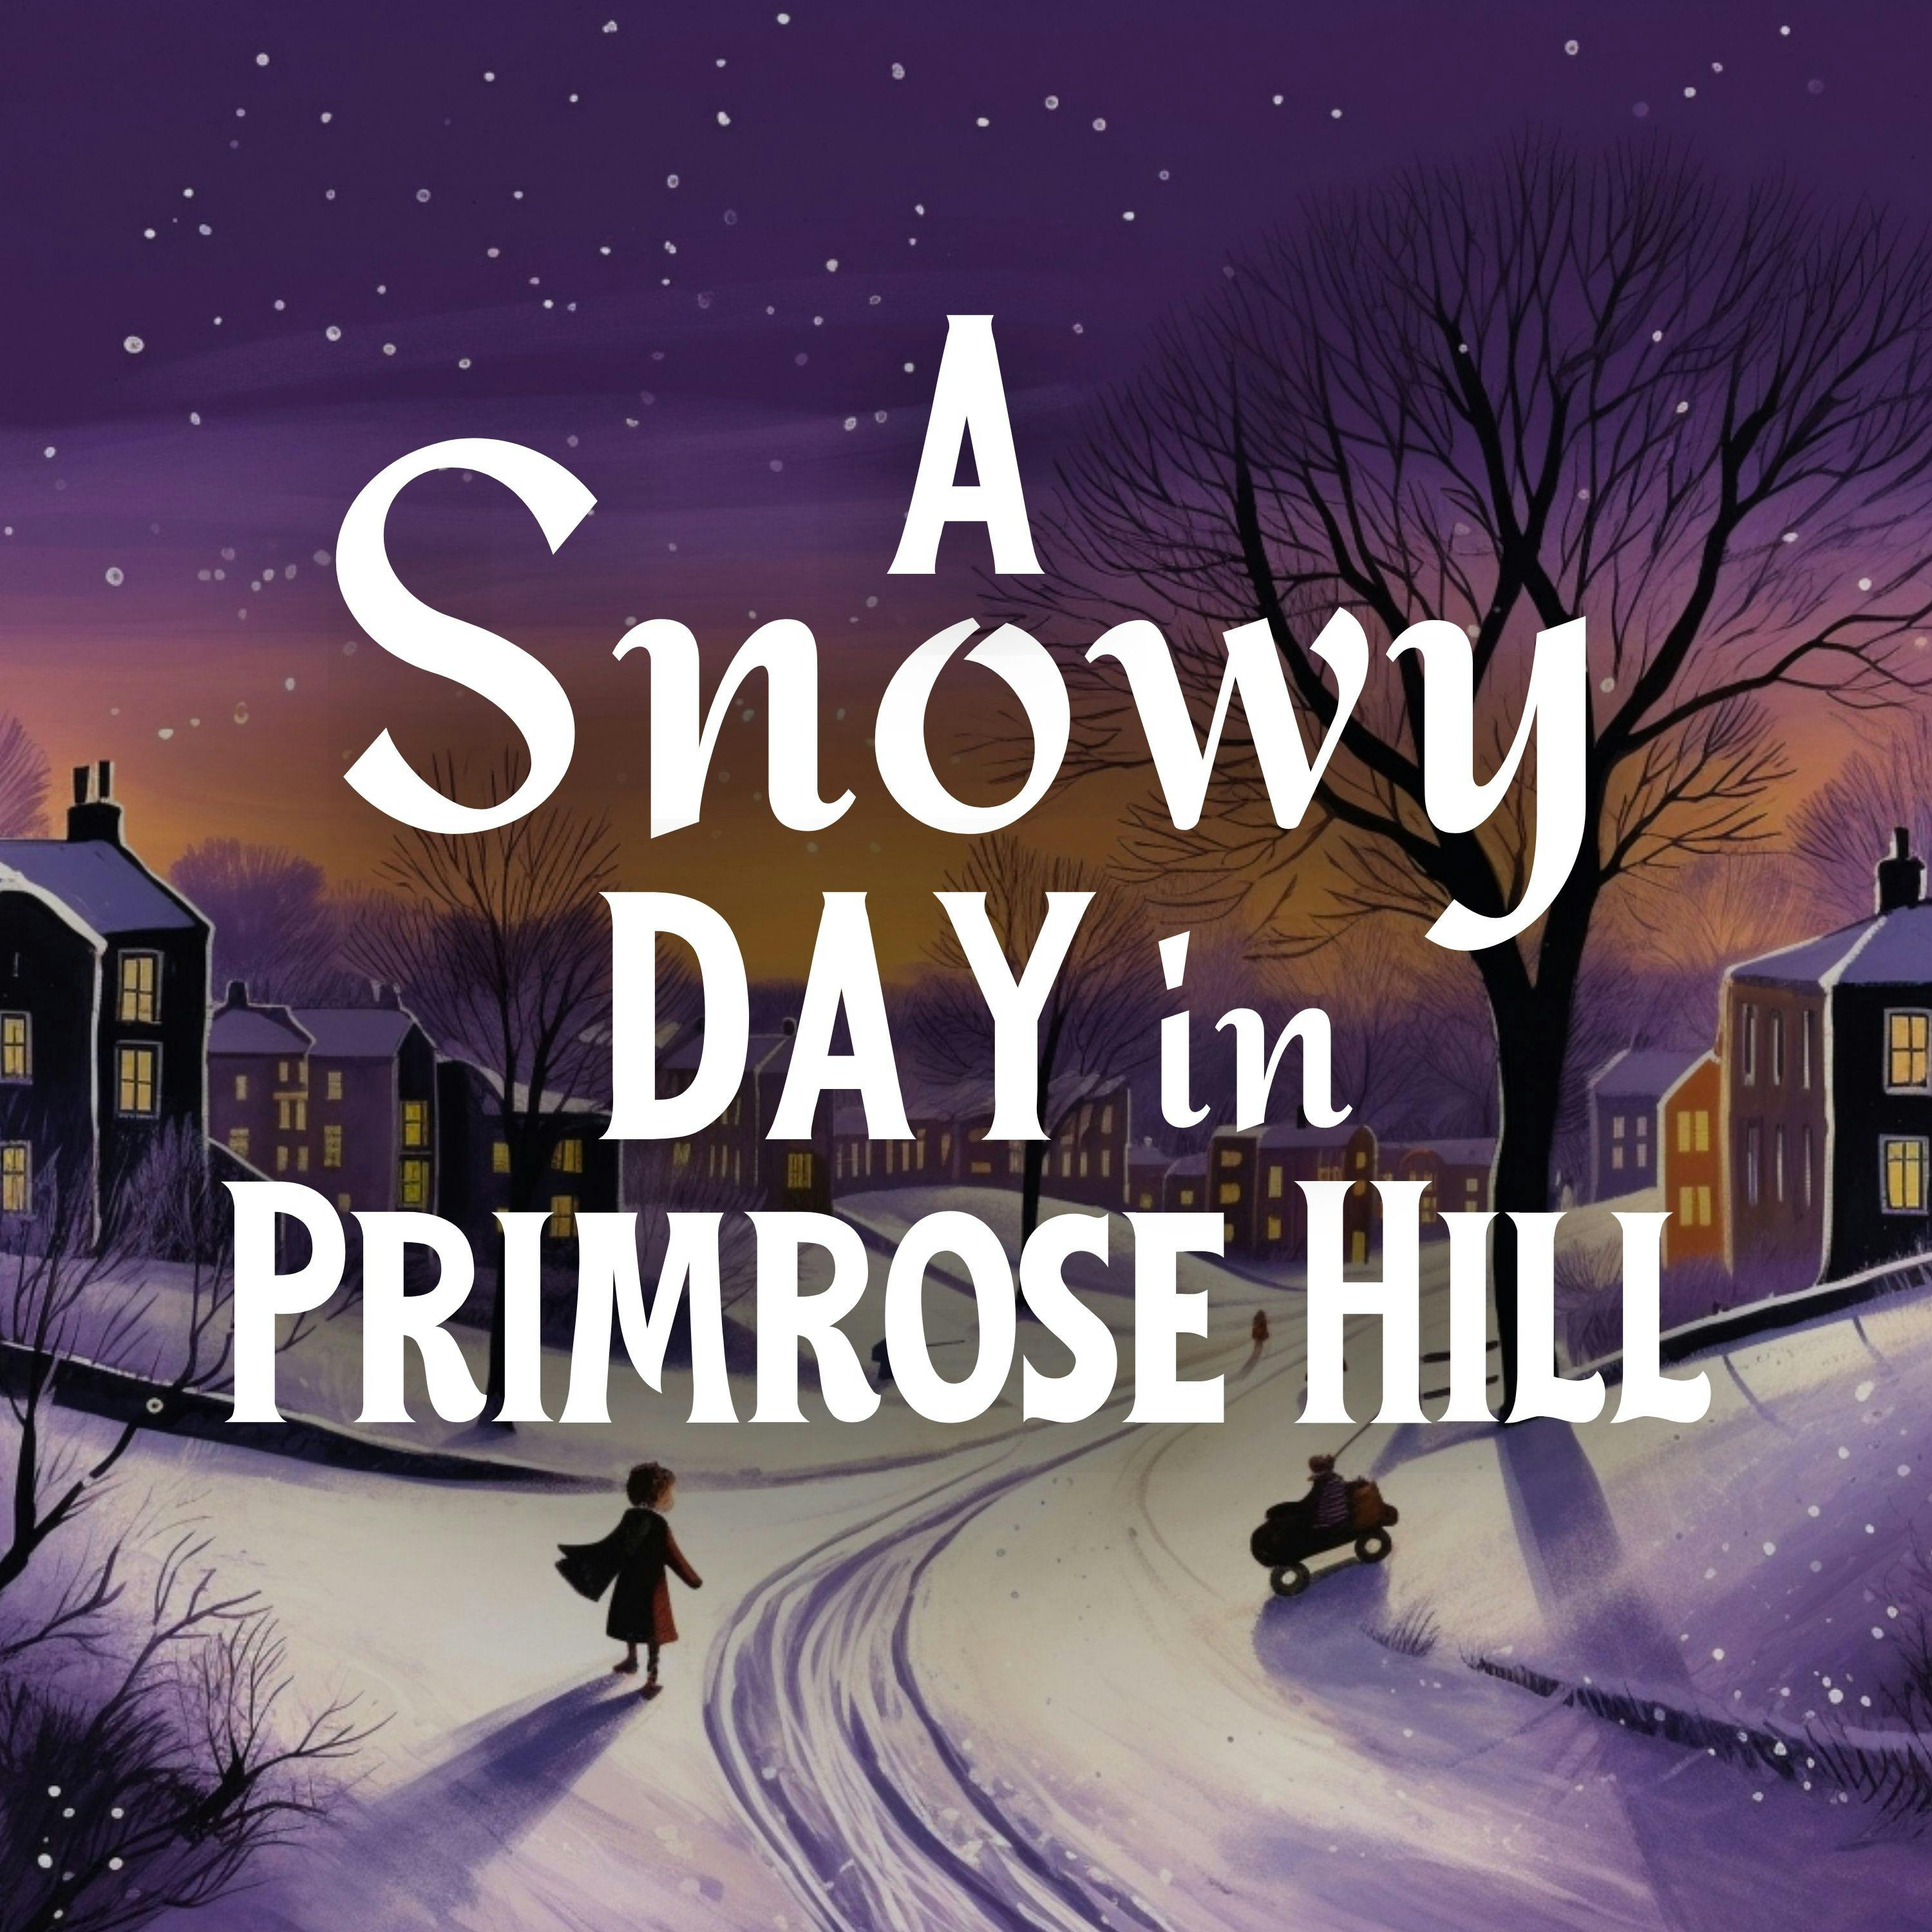 A Snowy Day in Primrose Hill